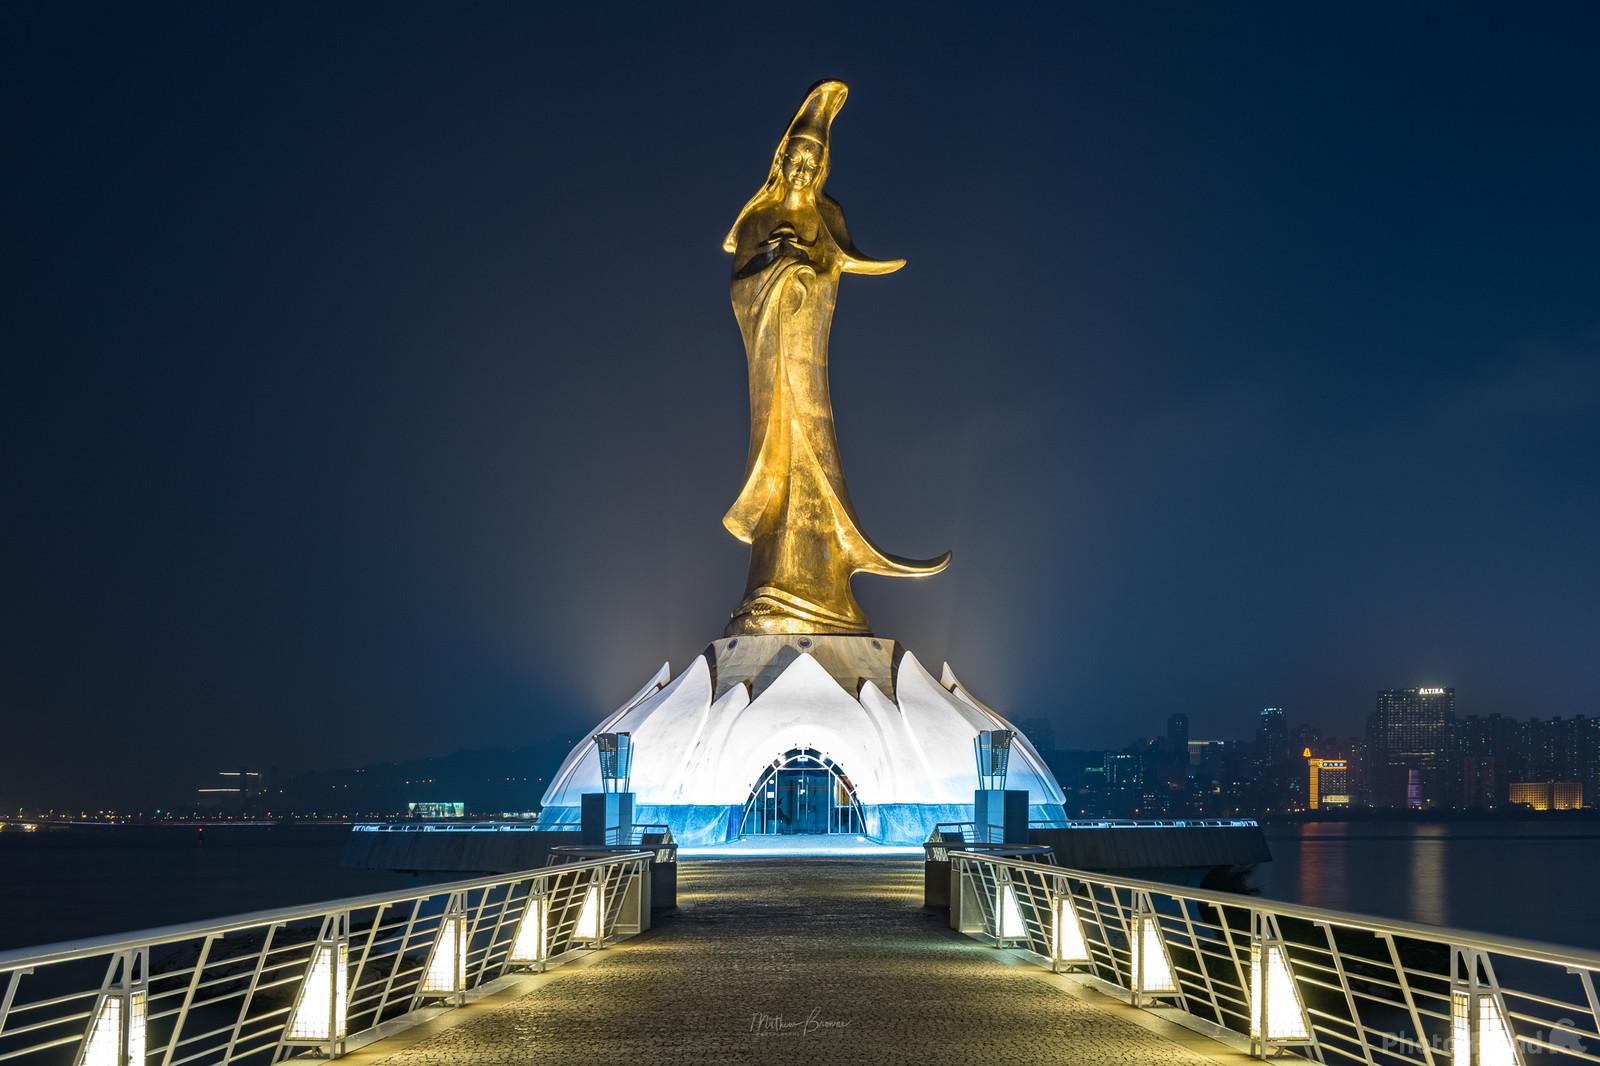 Image of Kun Iam Statue by Mathew Browne